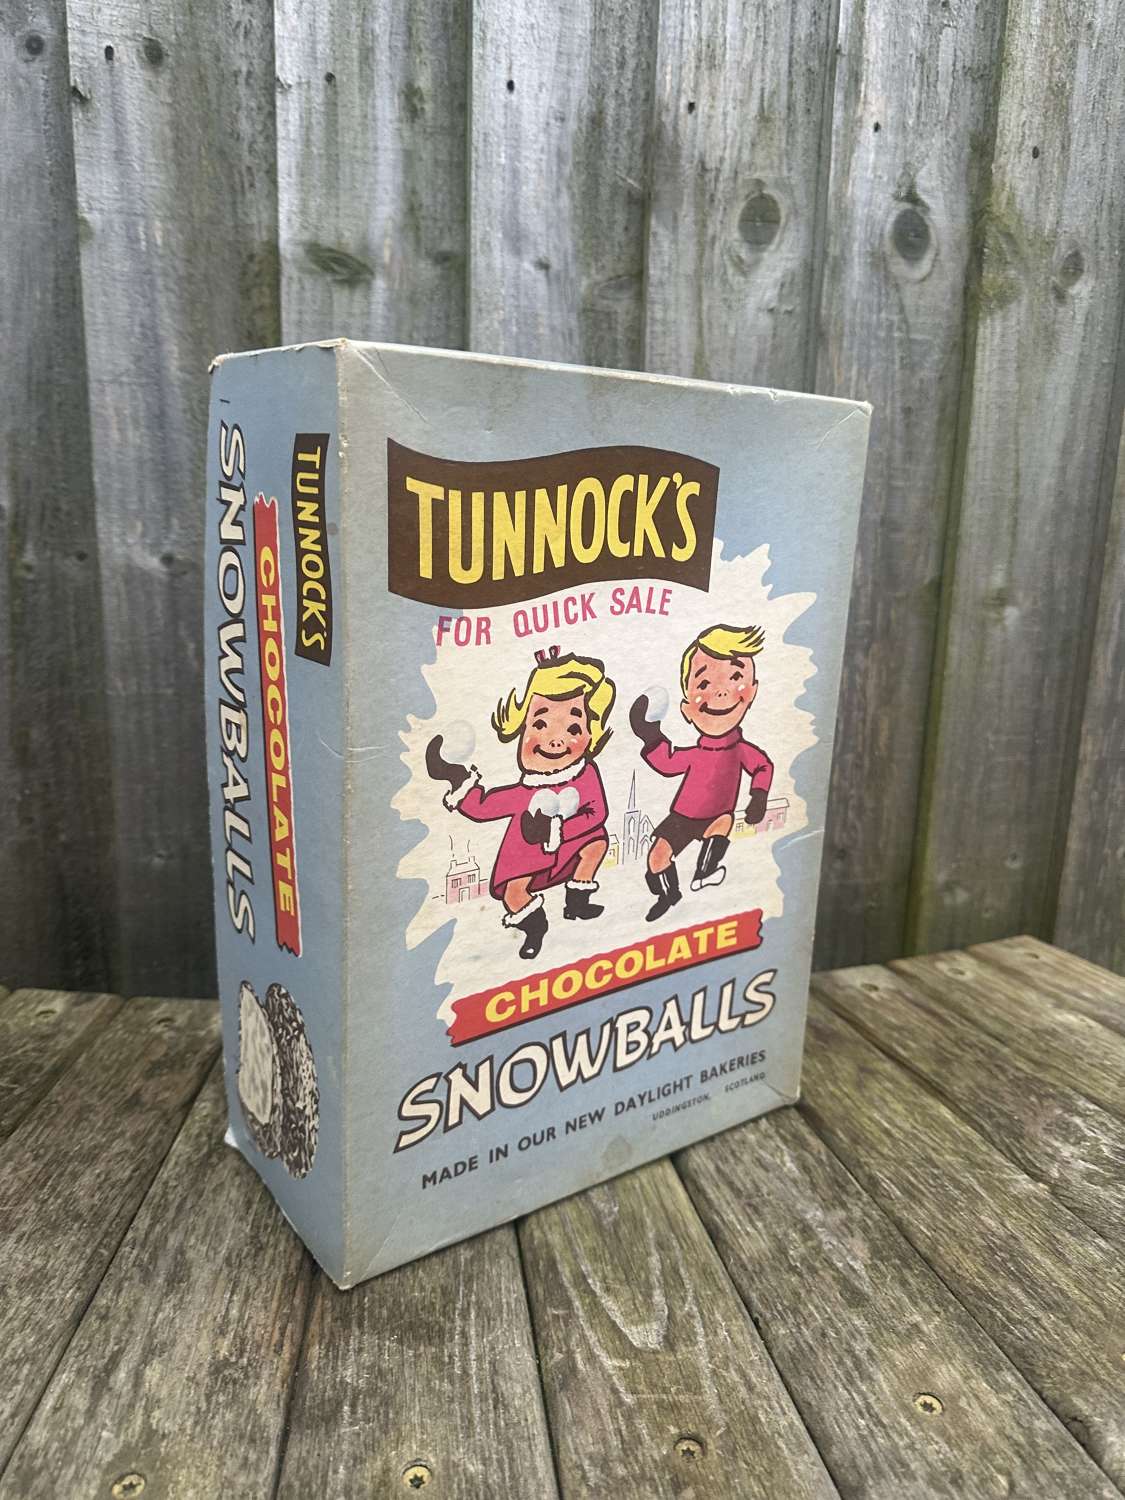 Lovely adverting box for tunnocks chocolate snowballs